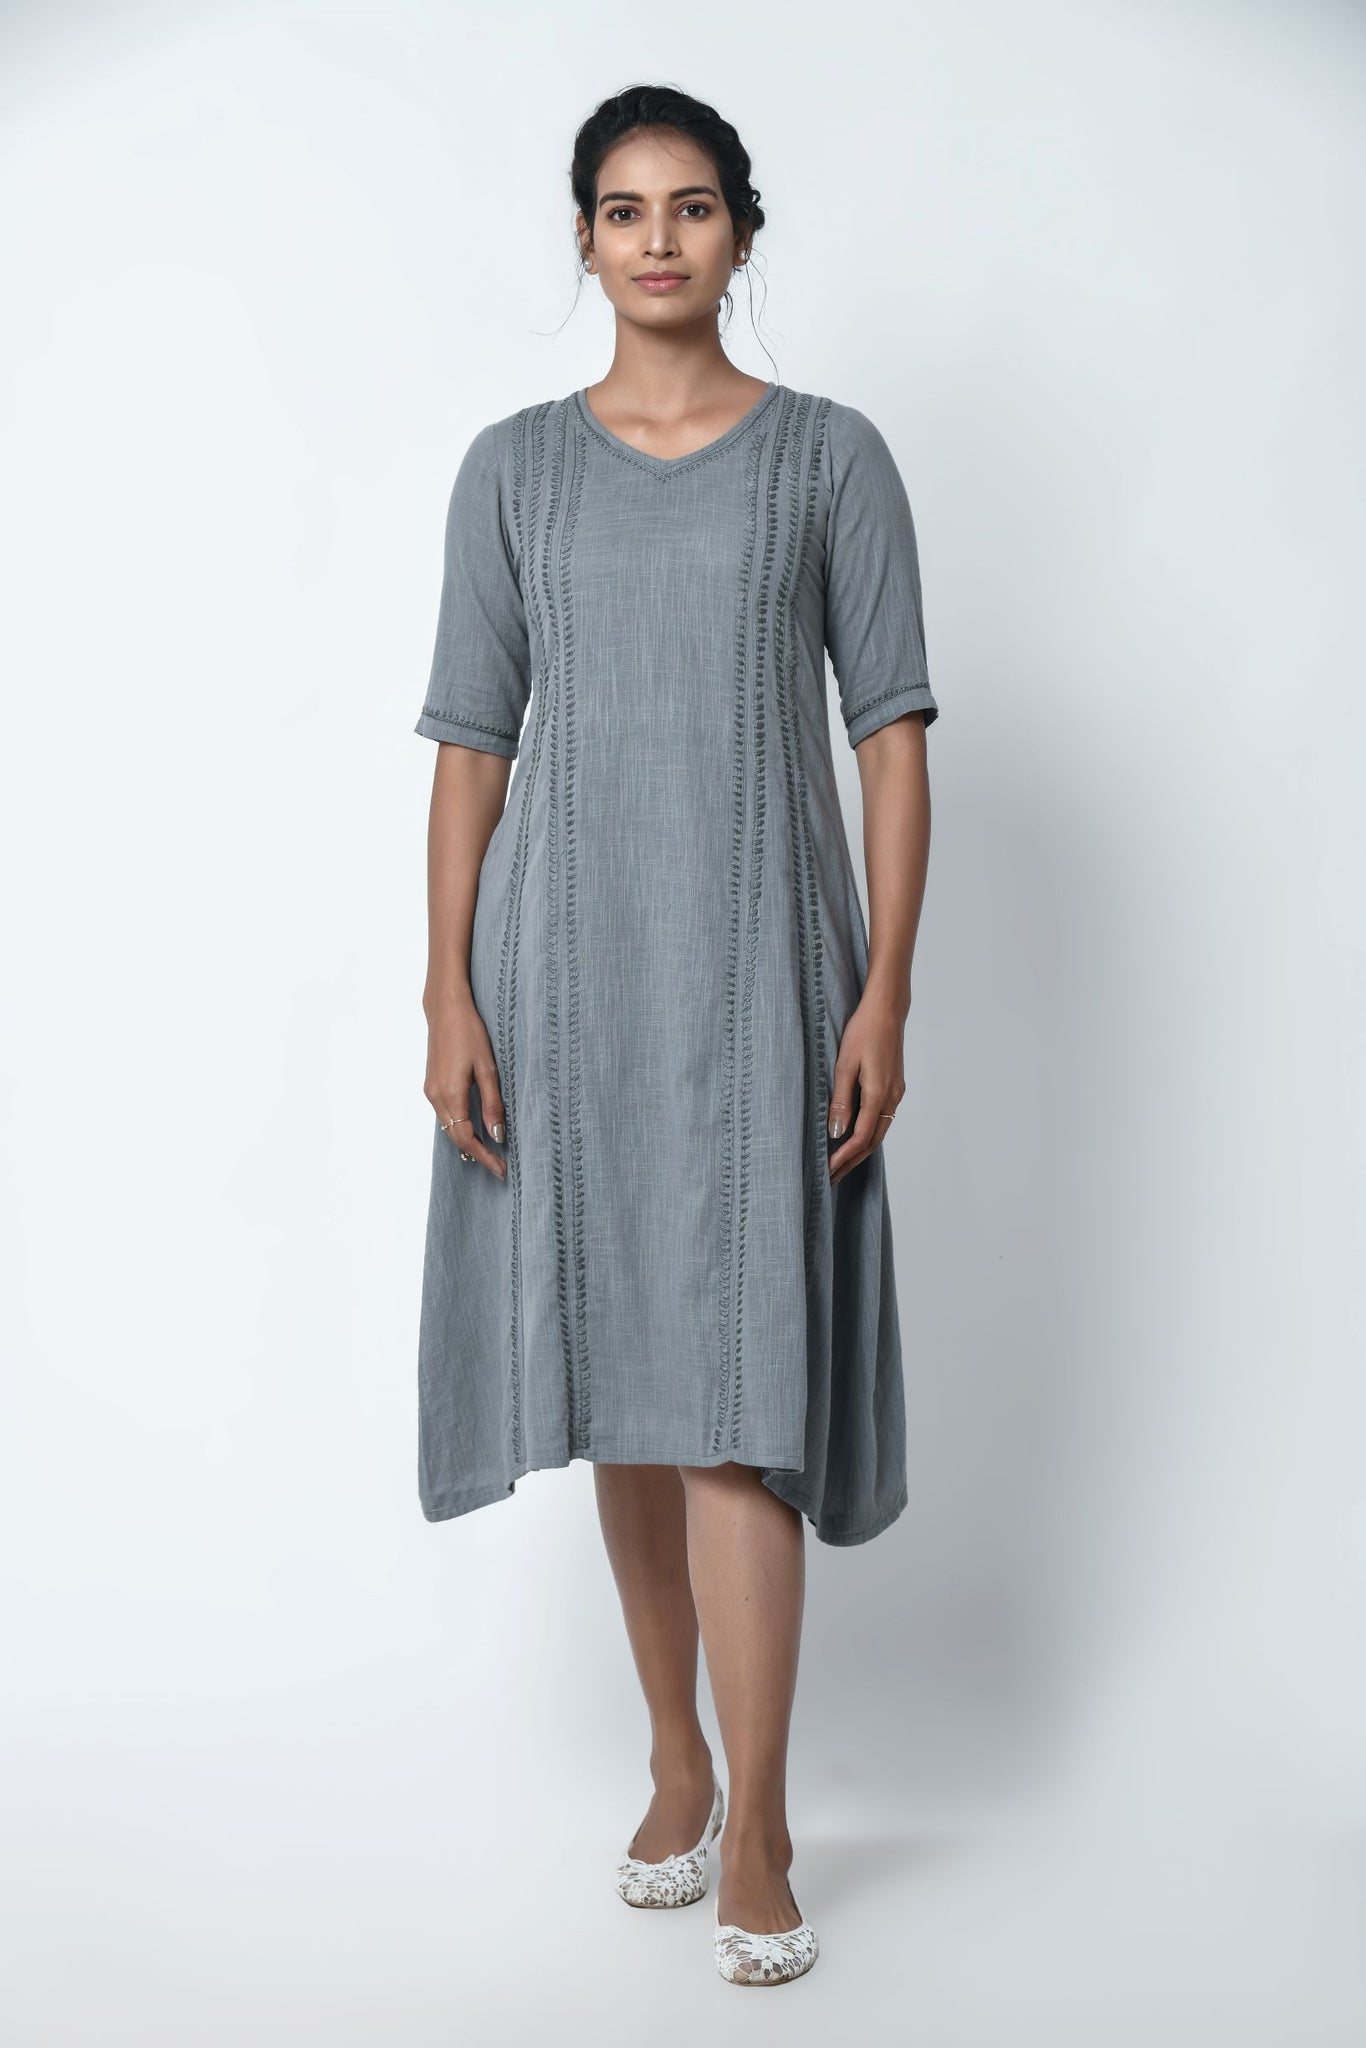 Phagun Lava Grey Panel Dress